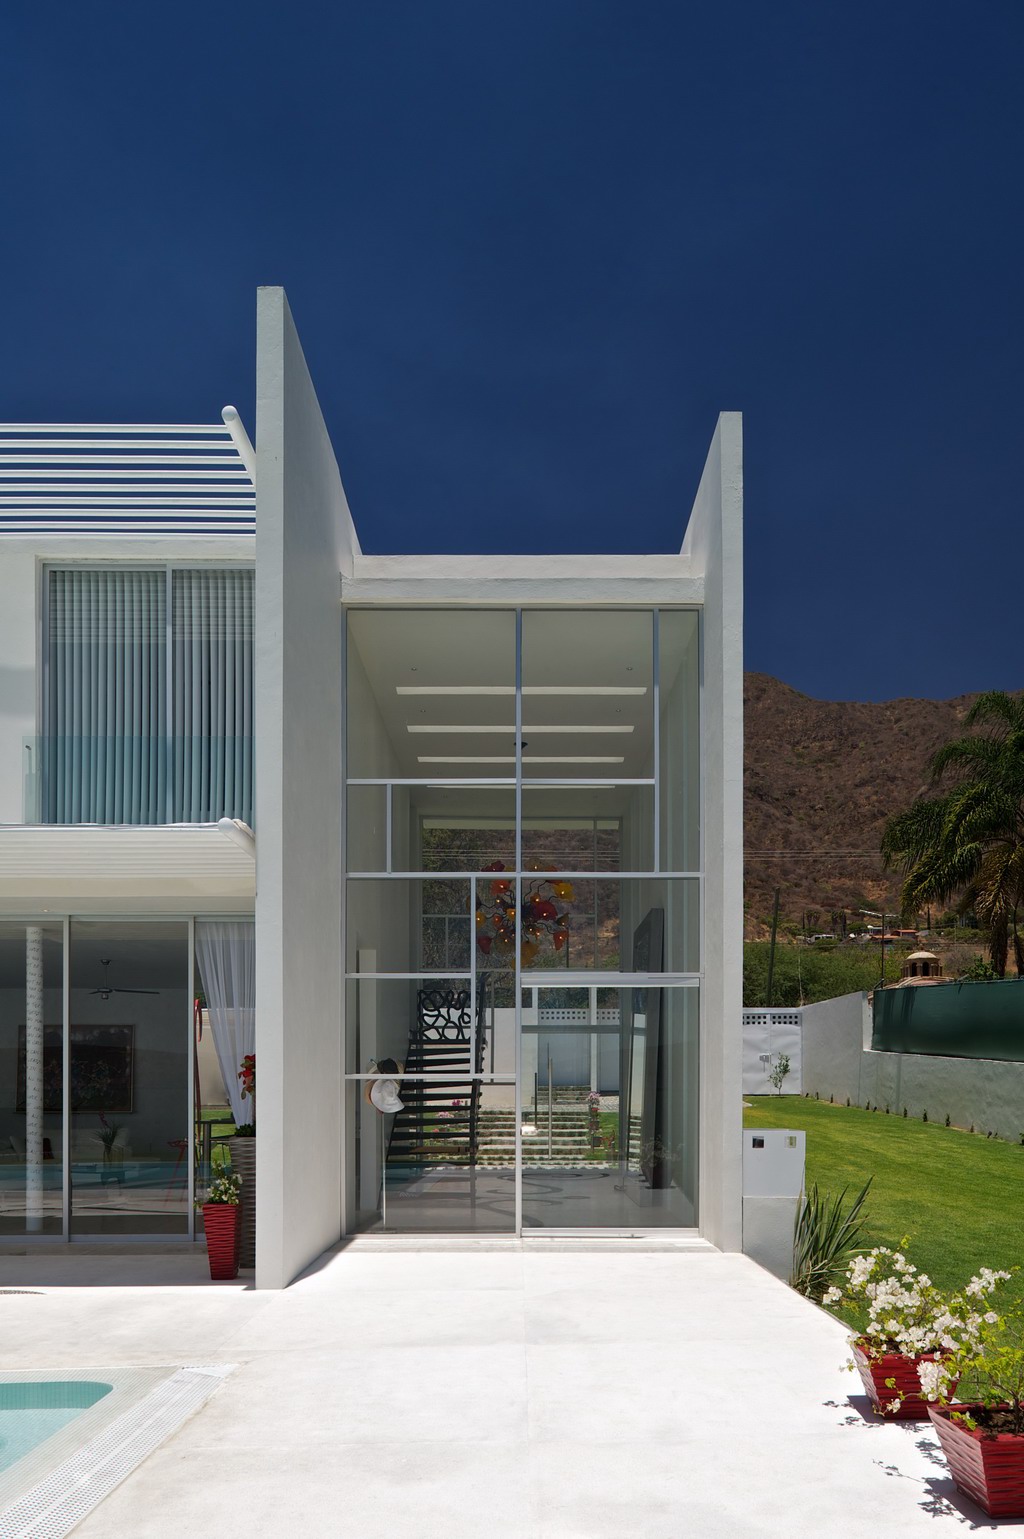 Mexican Architecture